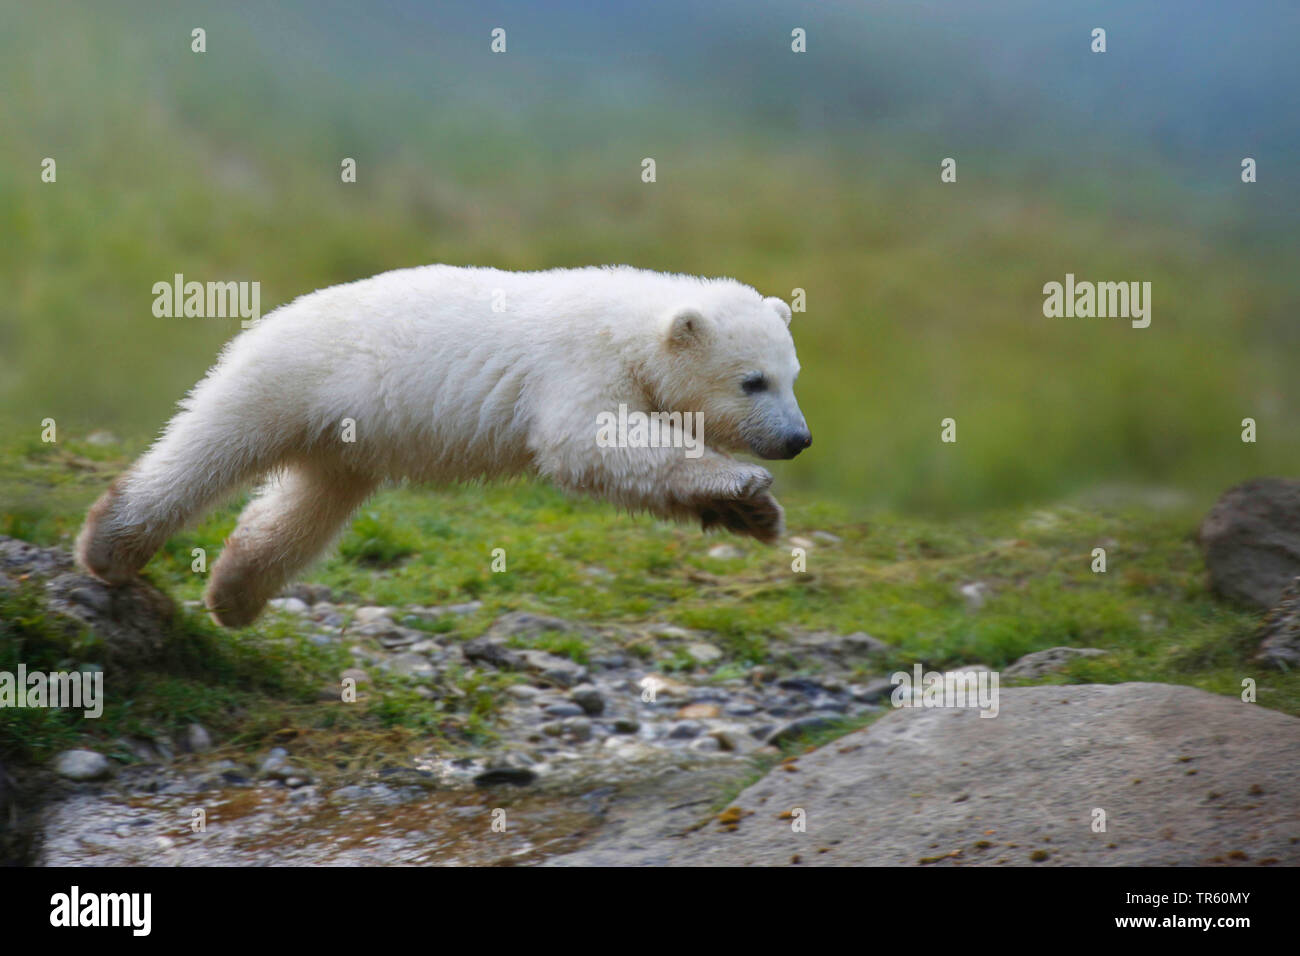 El oso polar (Ursus maritimus), osezno polar saltar por encima de un arroyo, vista lateral Foto de stock